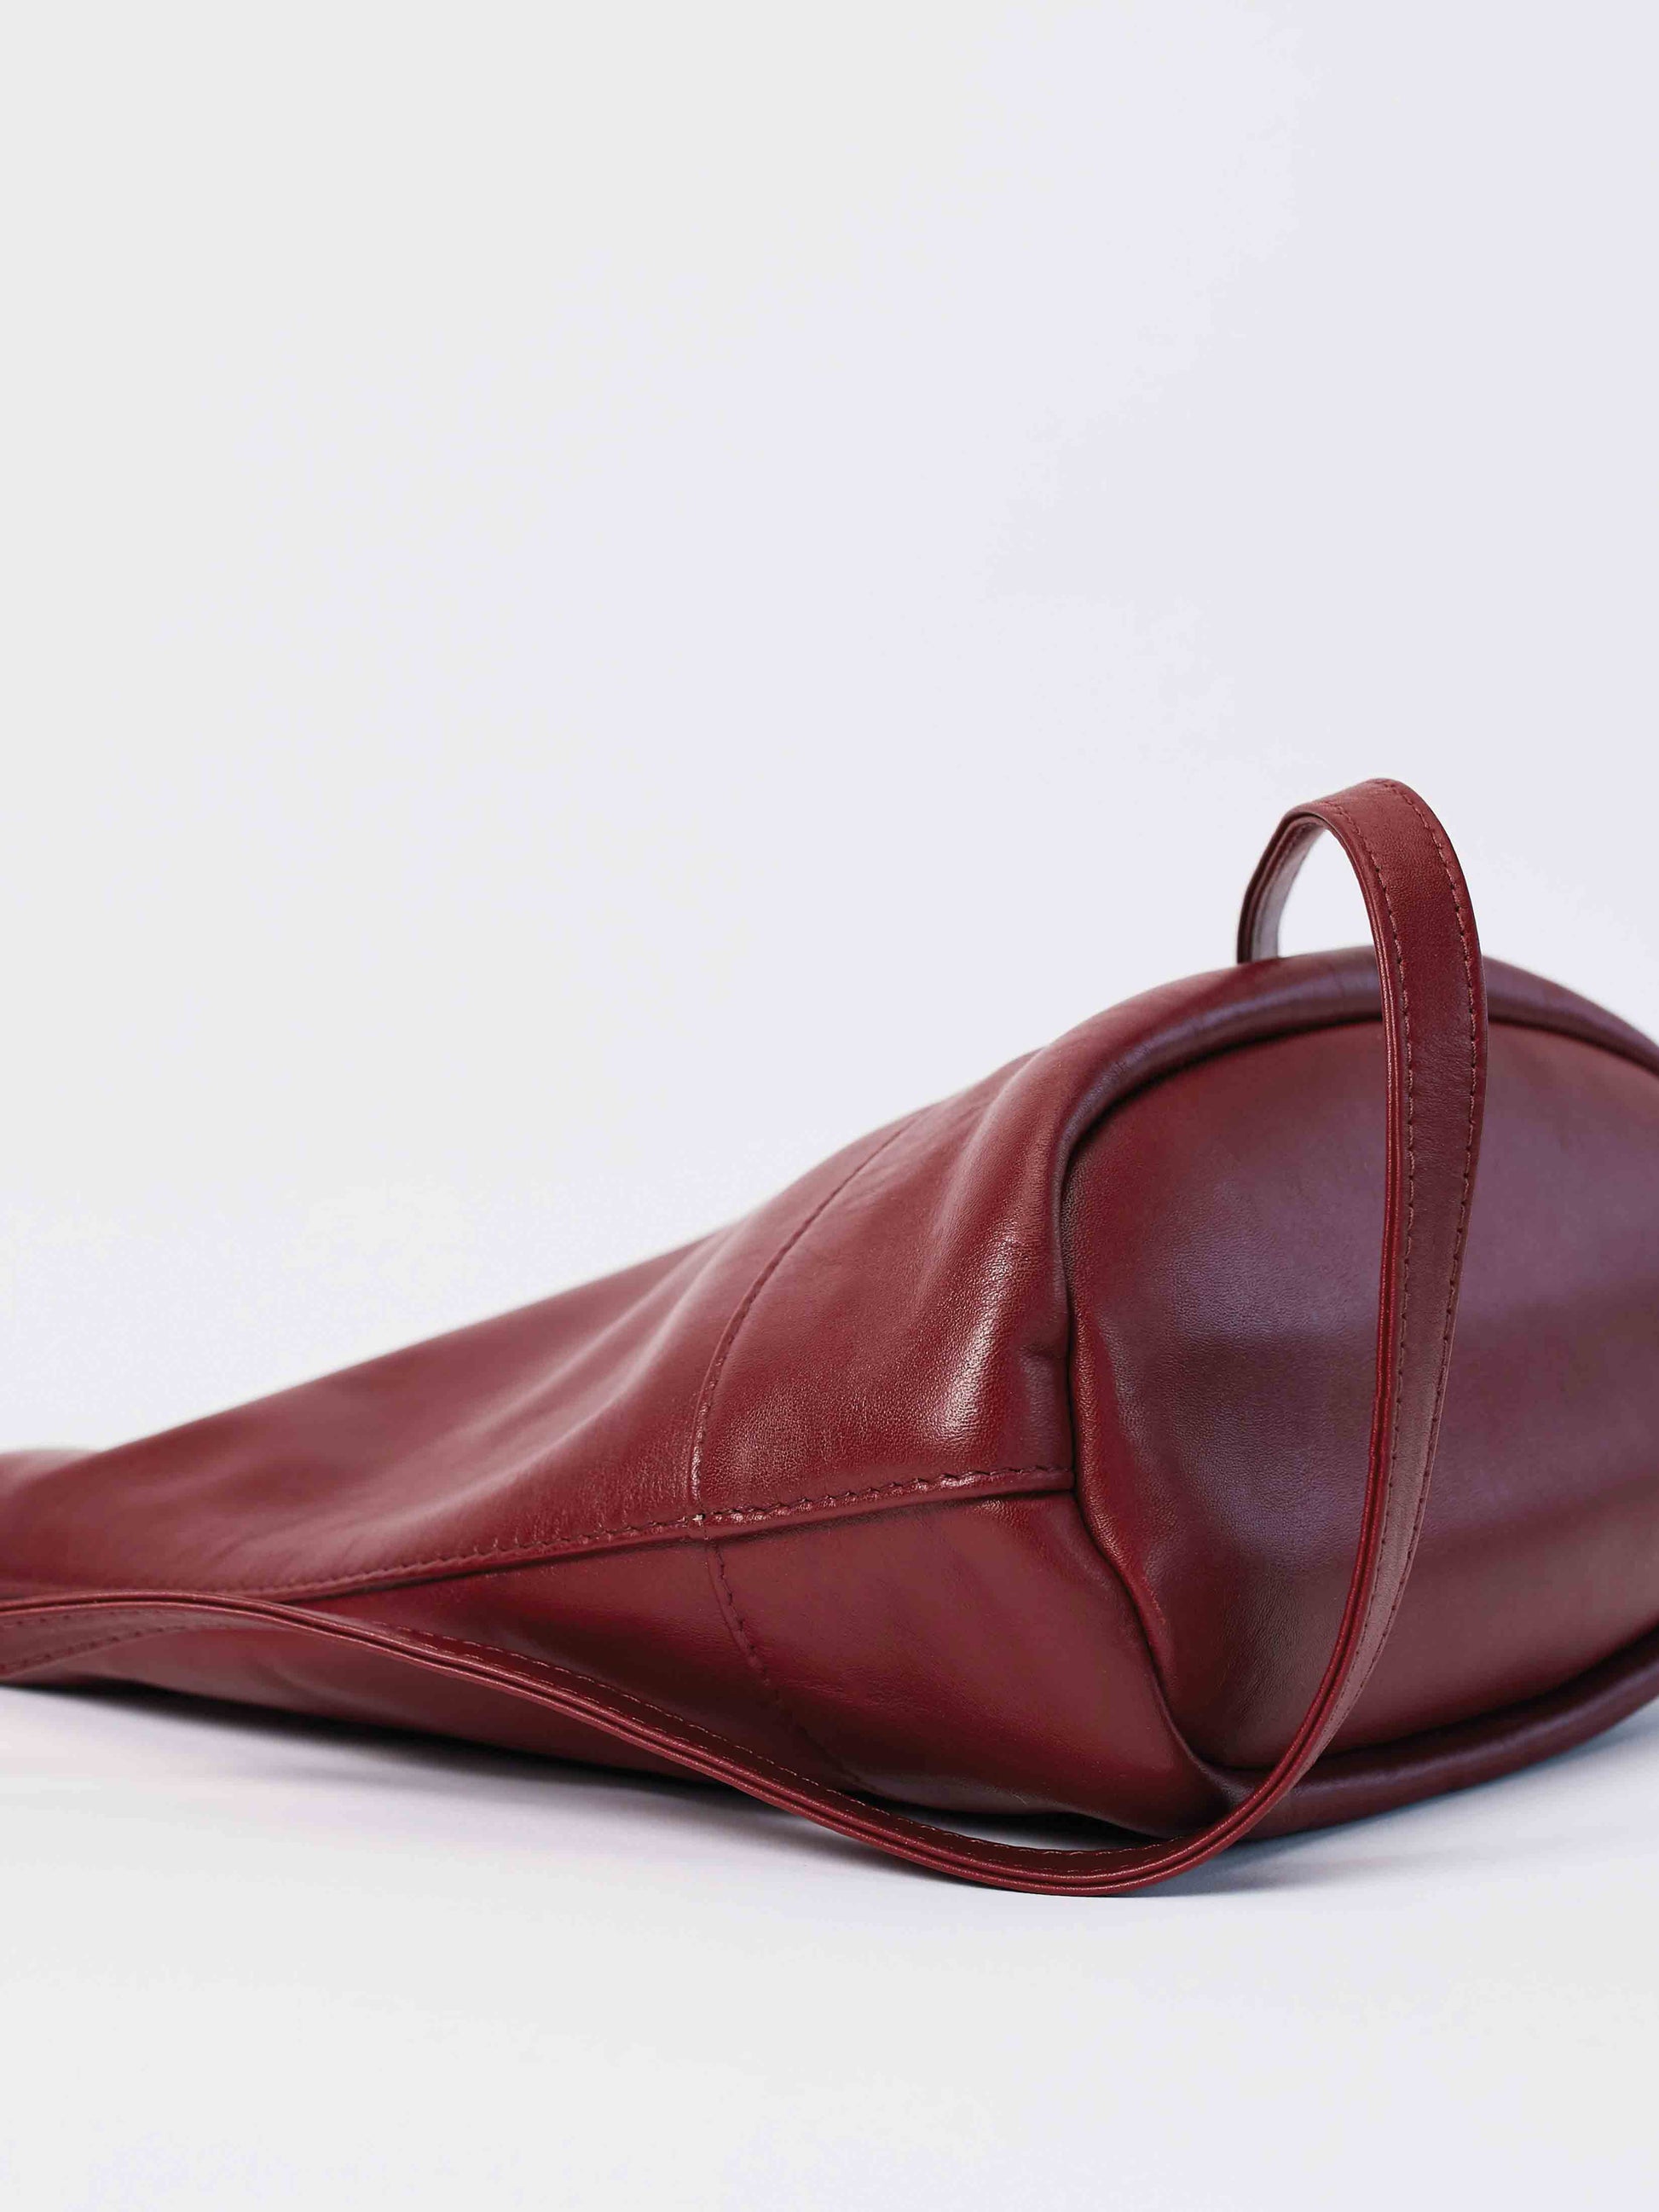  Leather Tote and Crossbody Cabernet Wood Tote by Payton James: Nashville Handbag Designer side view of bag